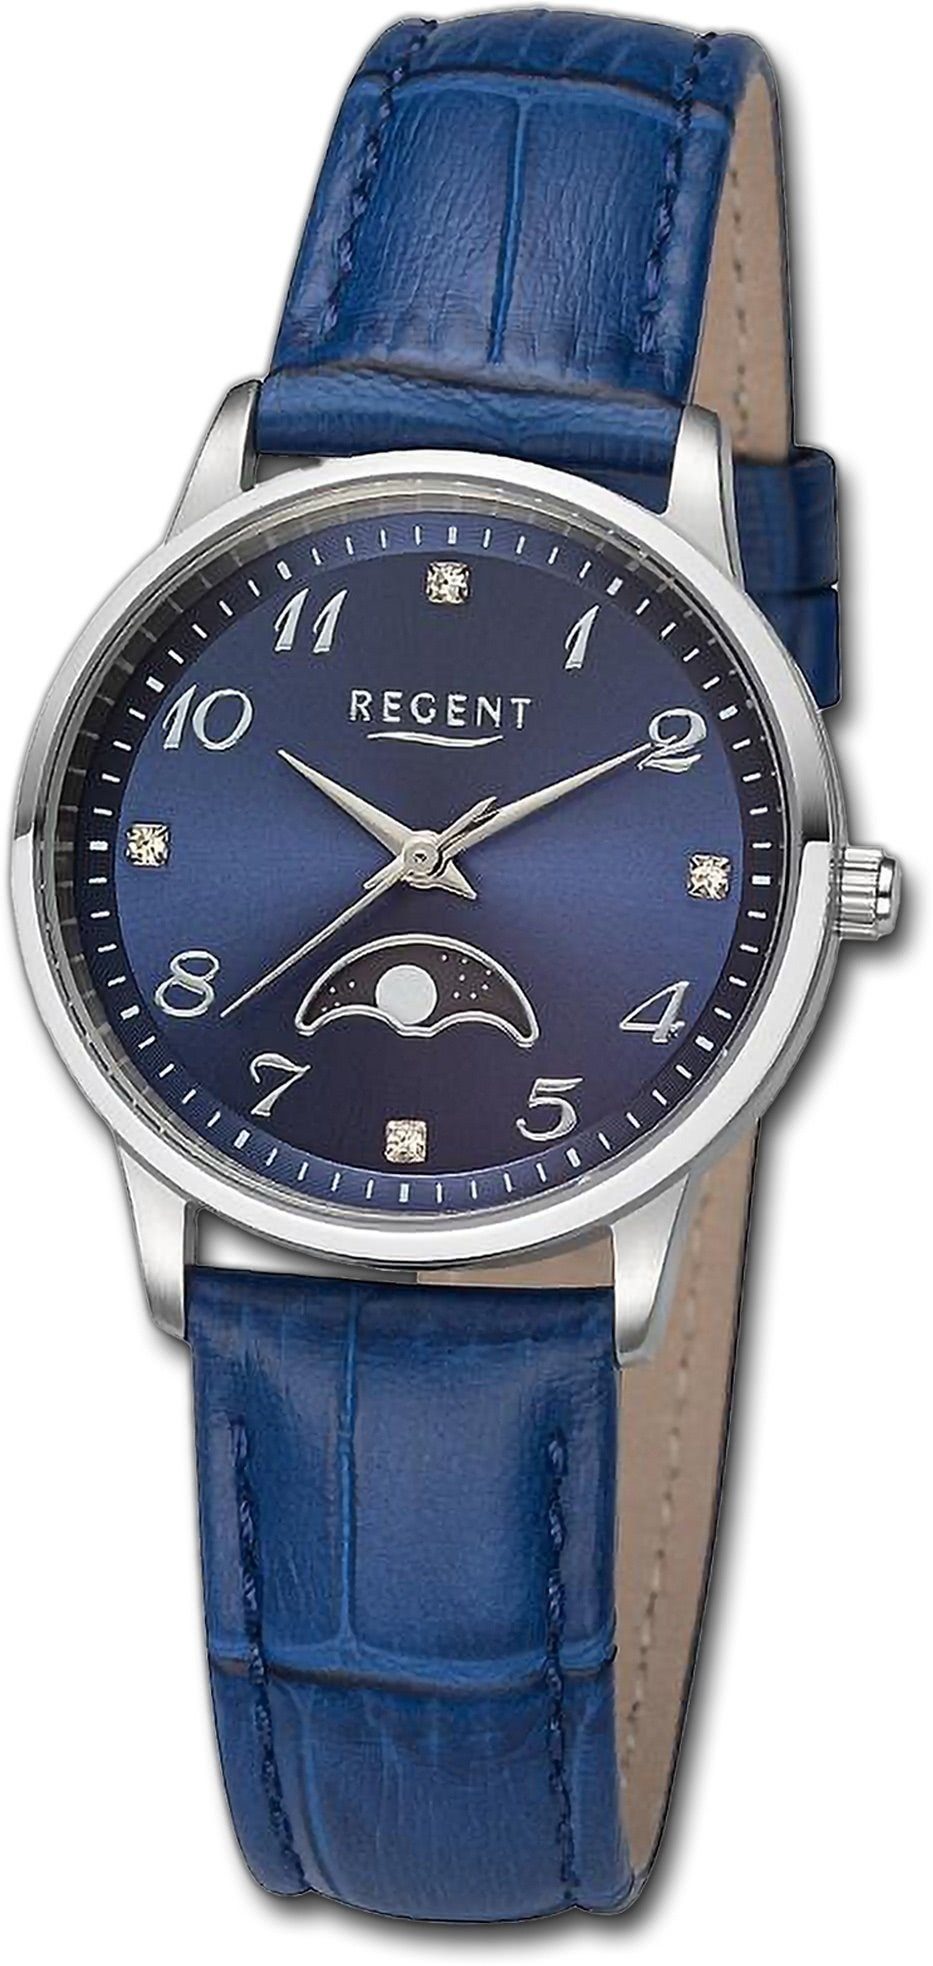 31,5mm) Regent (ca. Damen Regent rundes Damenuhr Lederarmband extra Gehäuse, groß blau, Armbanduhr Quarzuhr Analog,